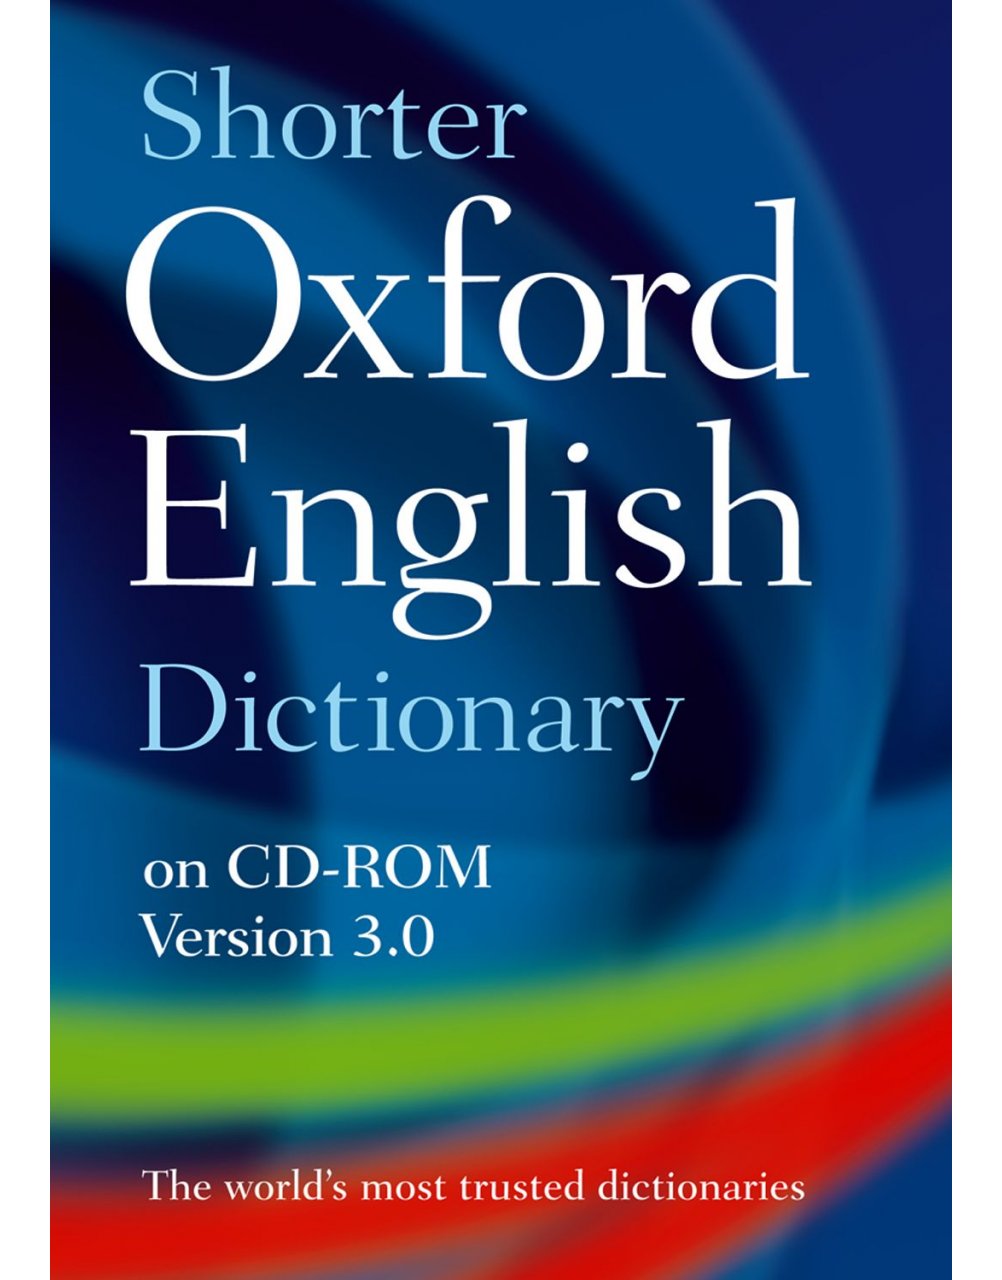 shorter oxford english dictionary version 3.0